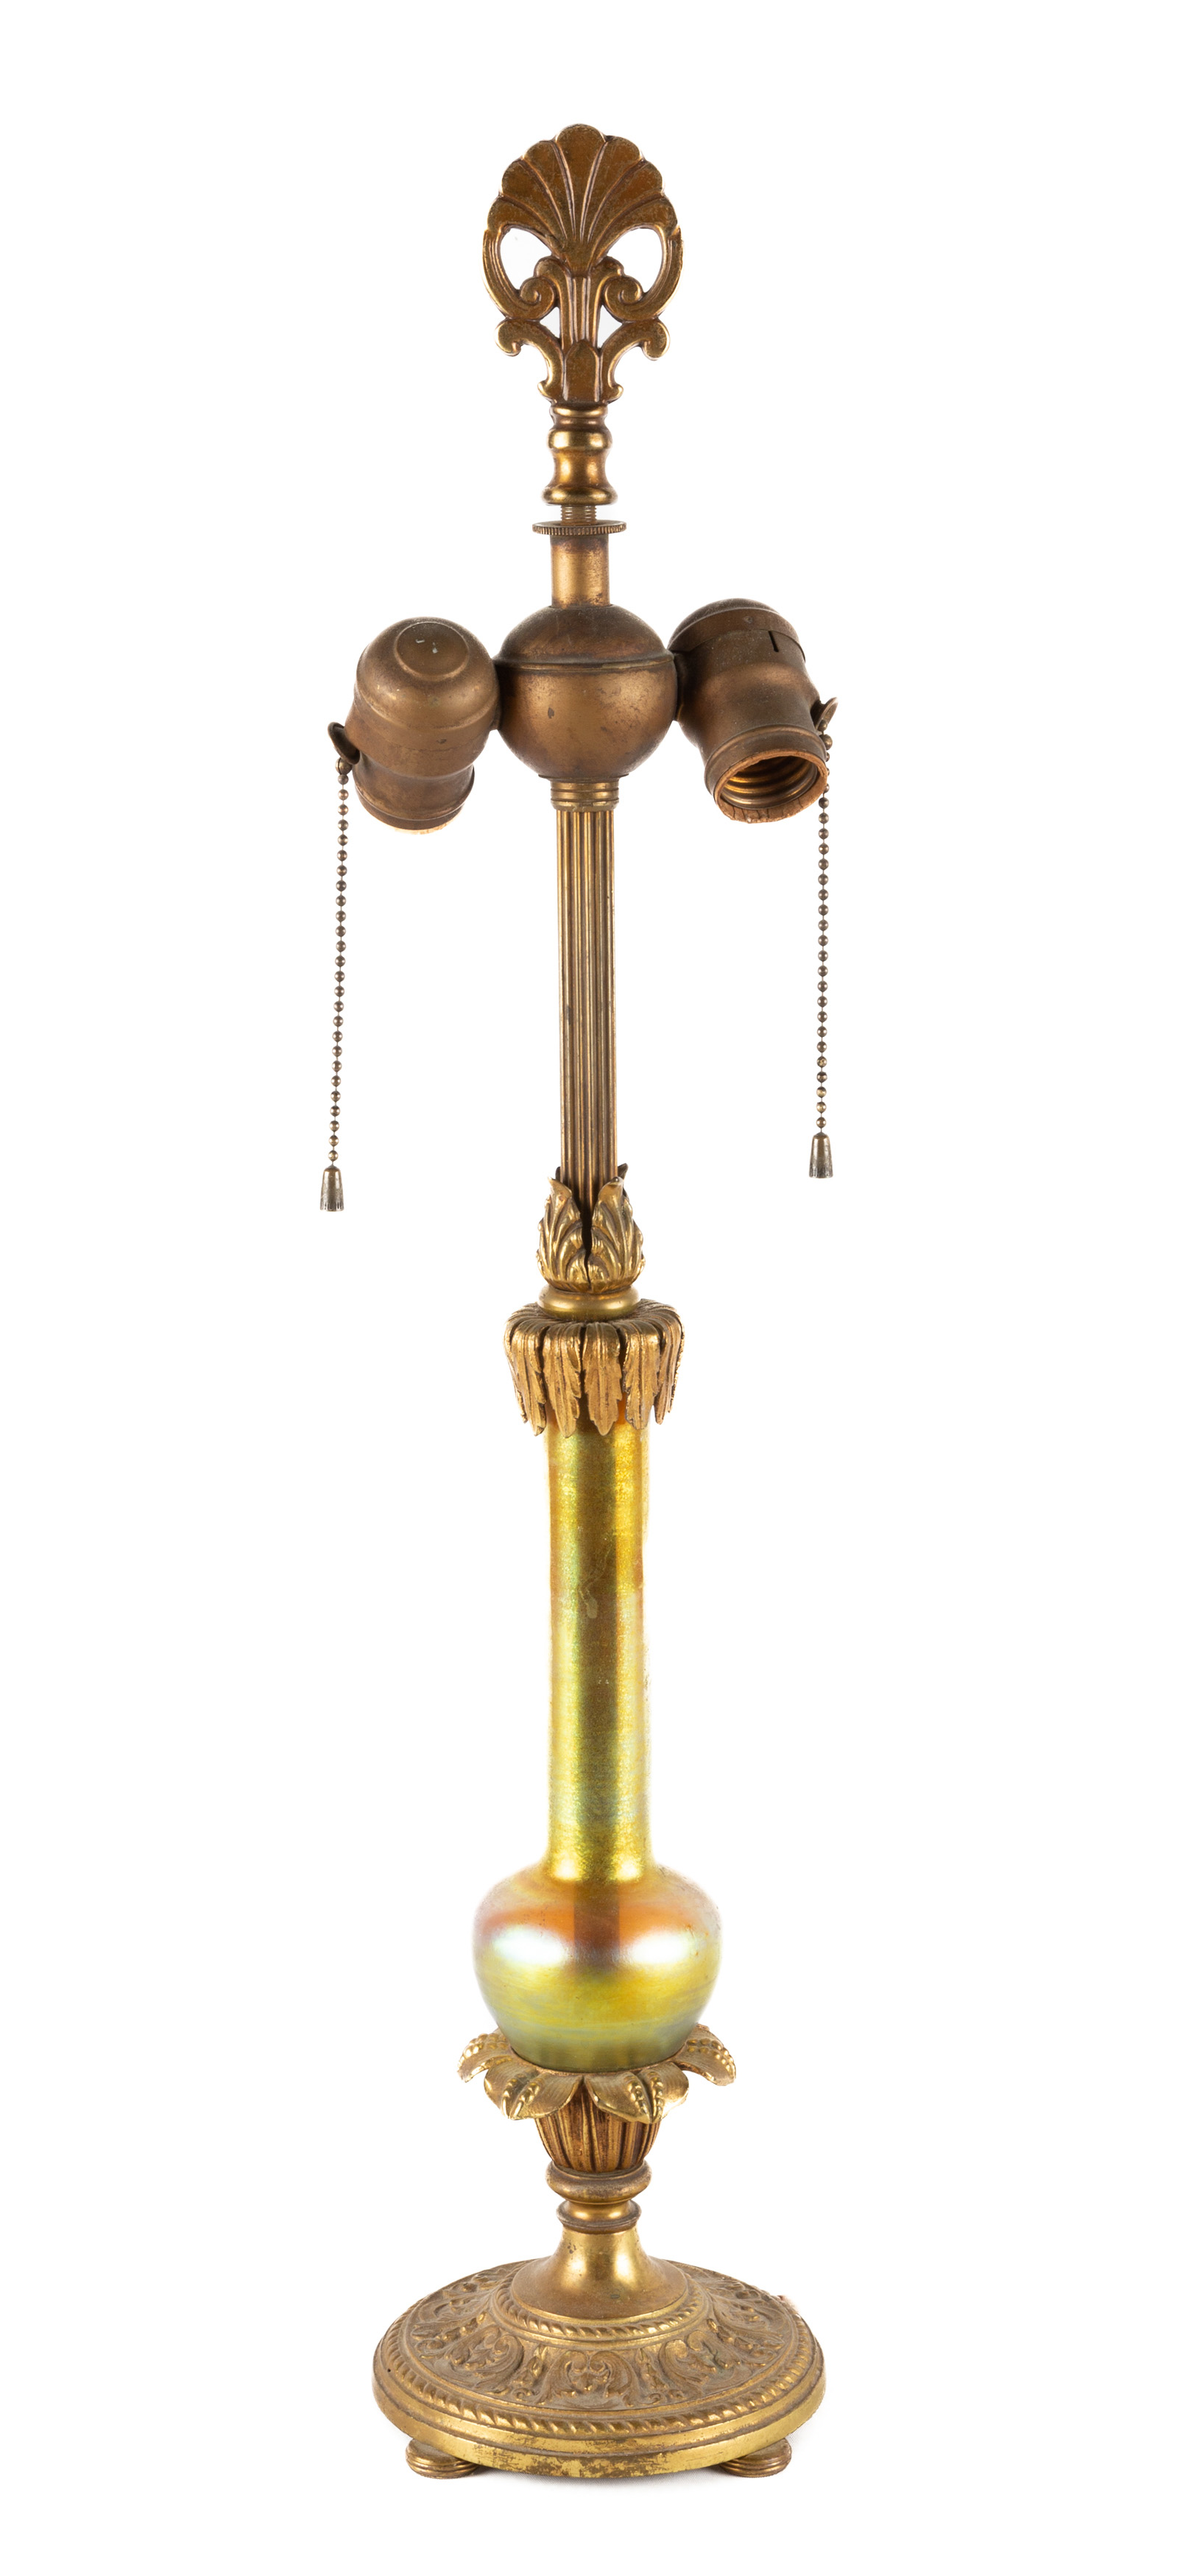 STEUBEN LAMP BASE Early 20th century.